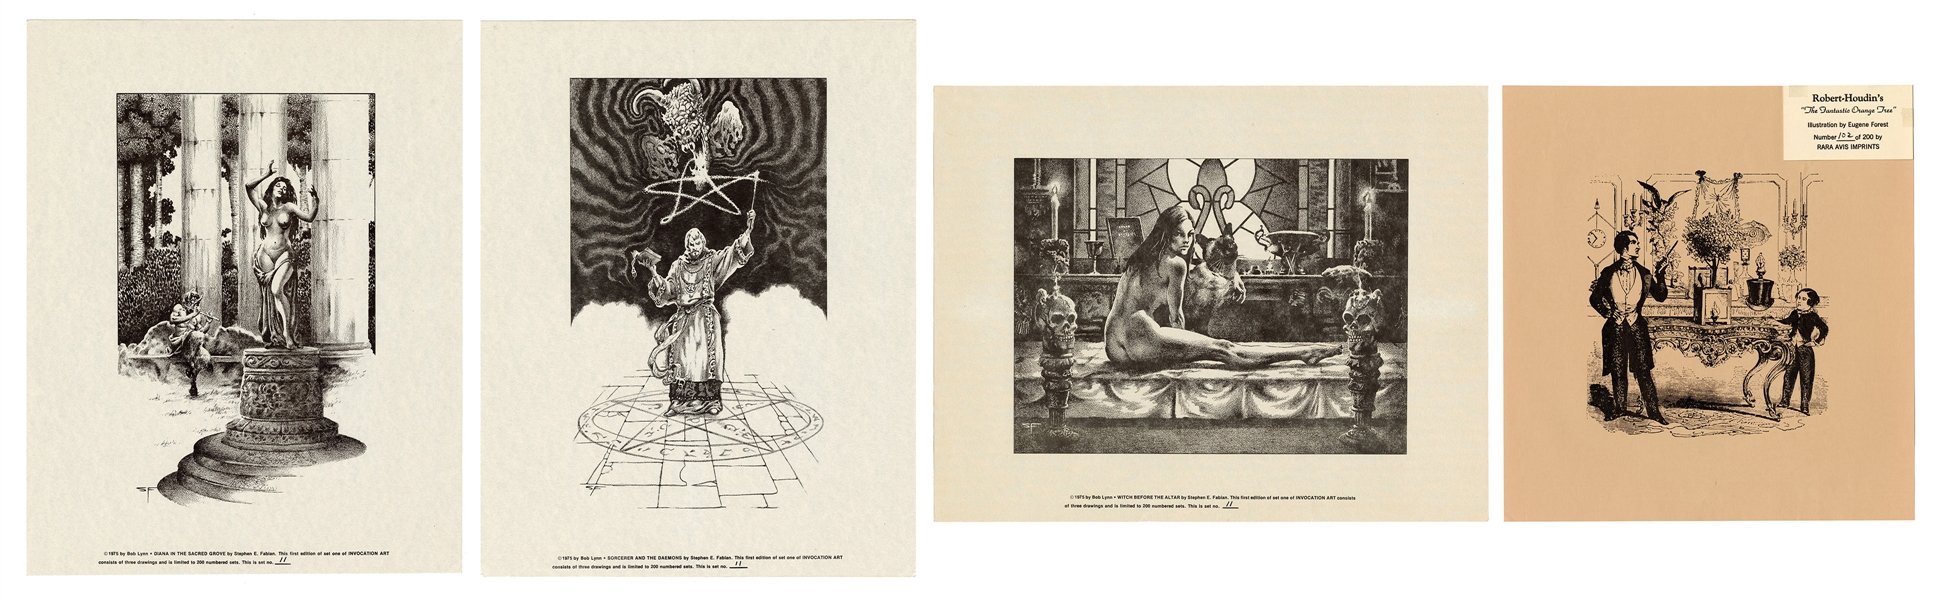  Fabian, Stephen E. “Invocation Art” Limited Edition Prints....